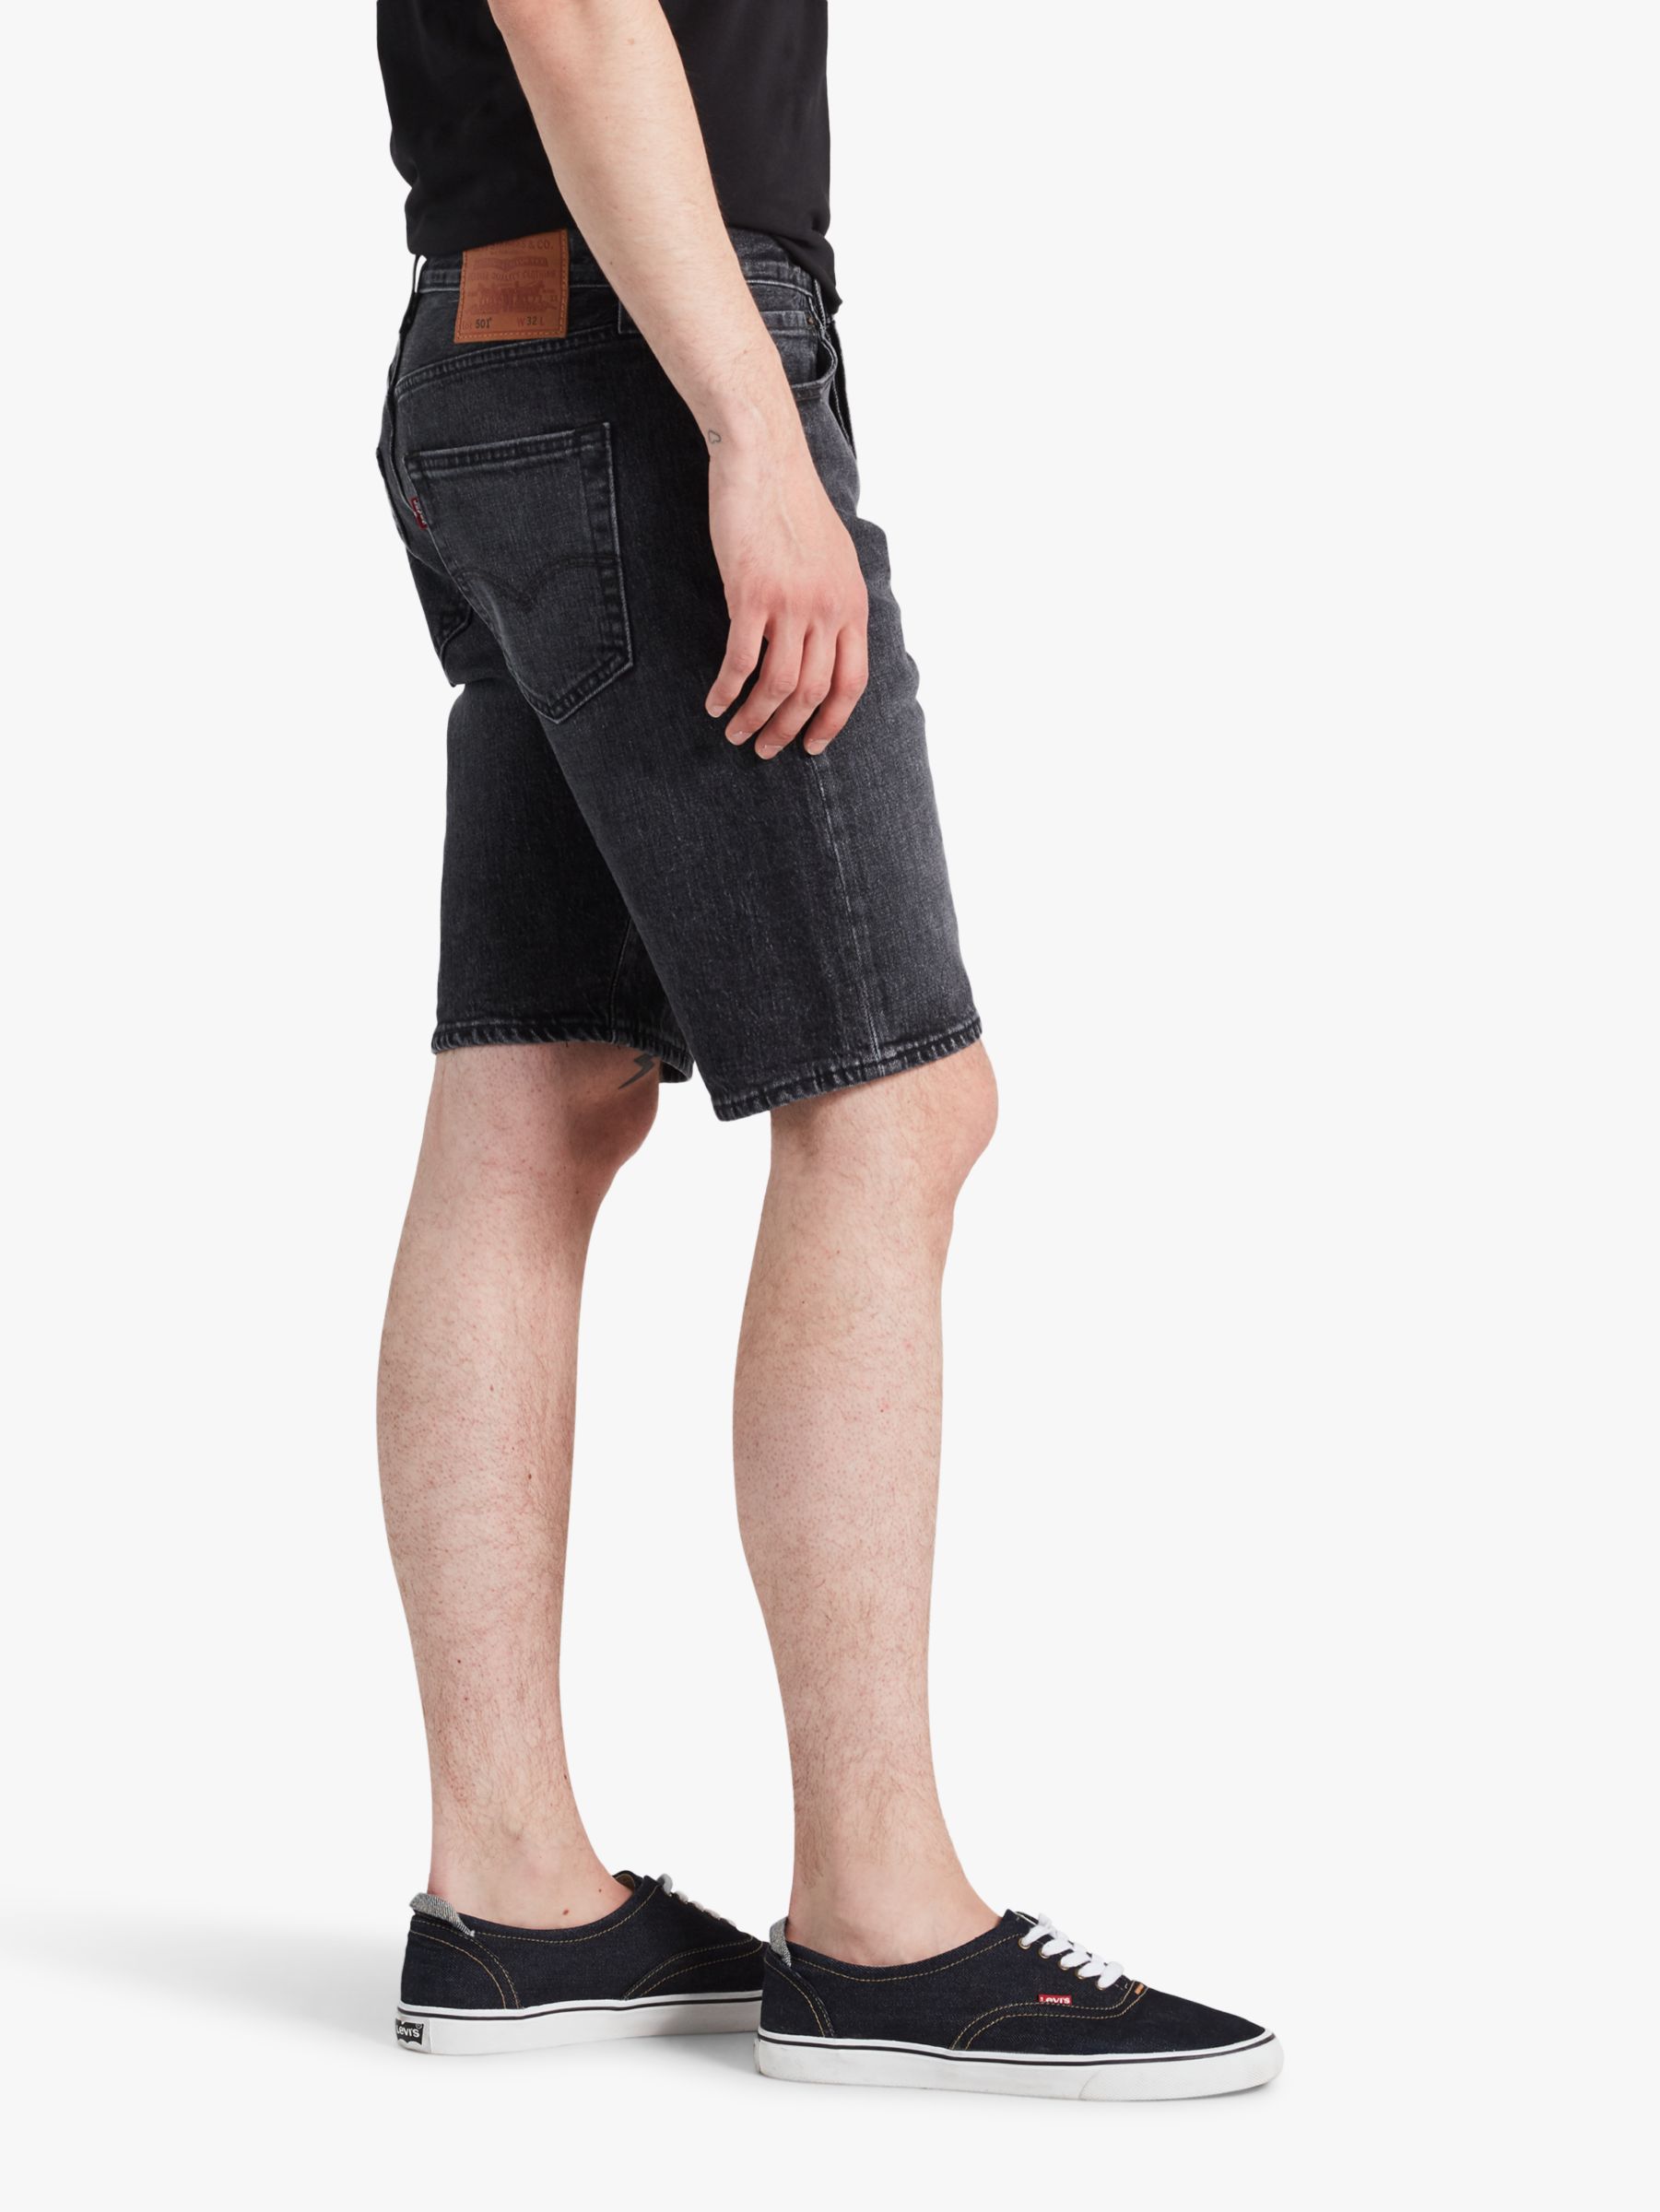 levi's 501 hemmed shorts